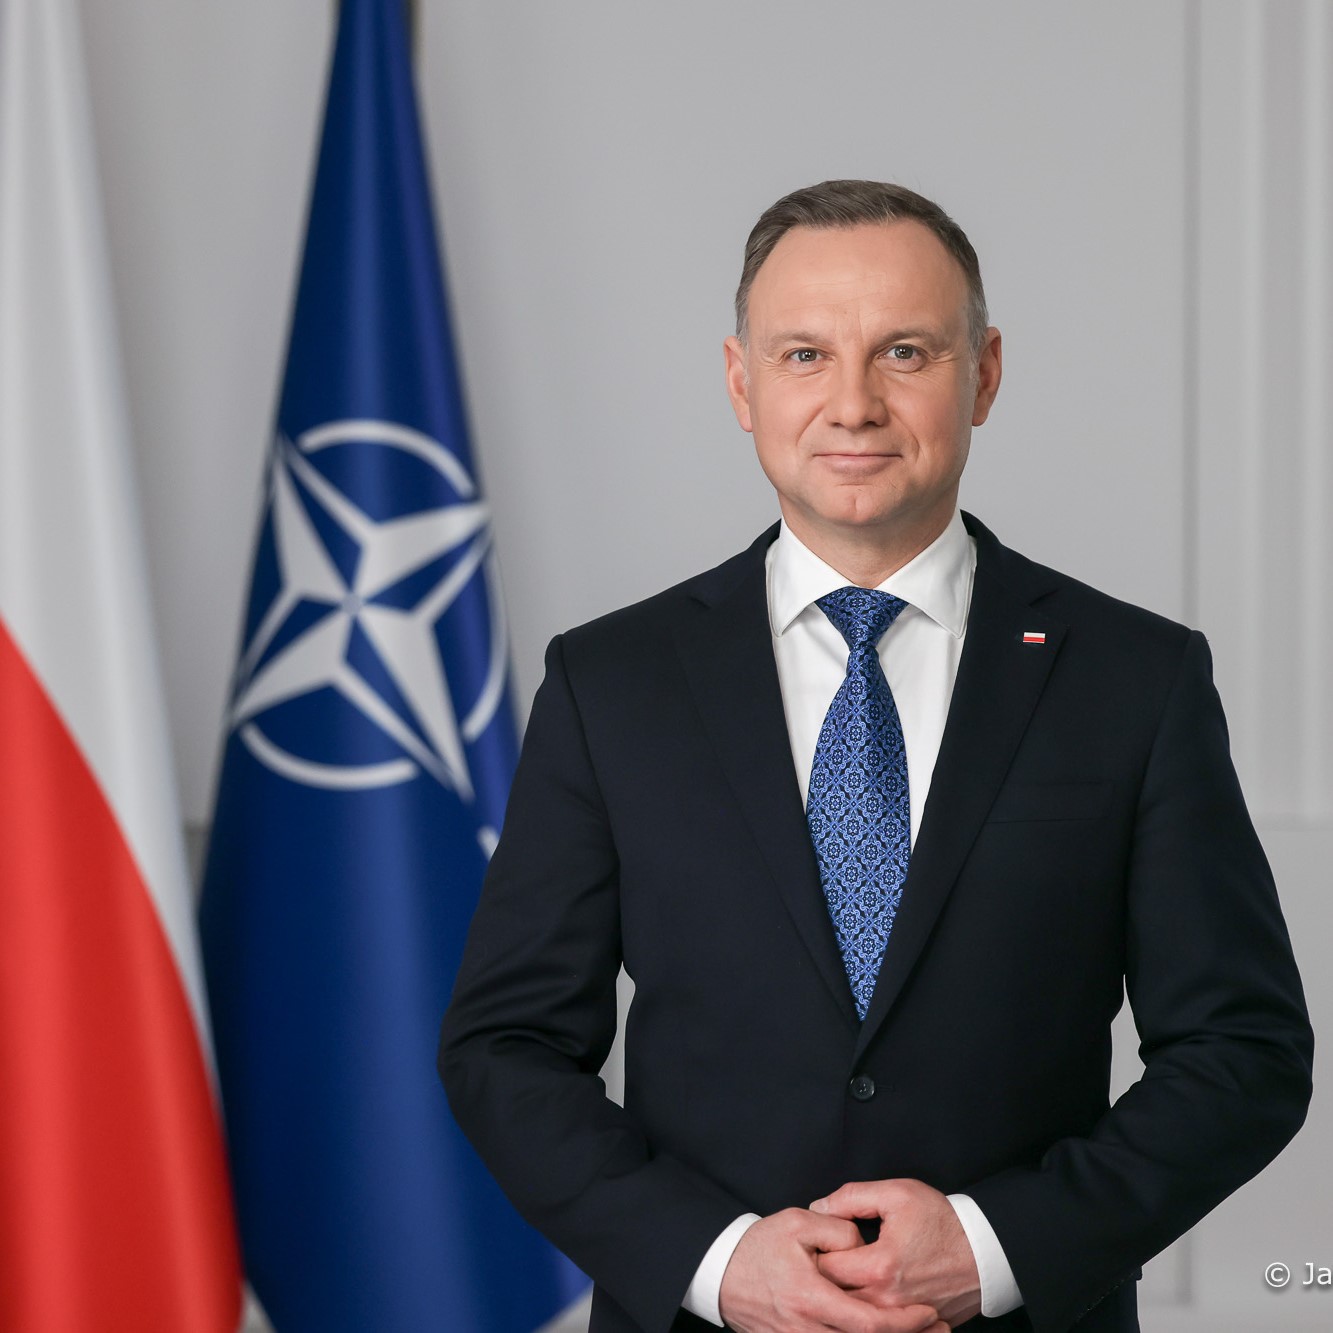 President of the Republic of Poland_Andrzej_Duda.jpg